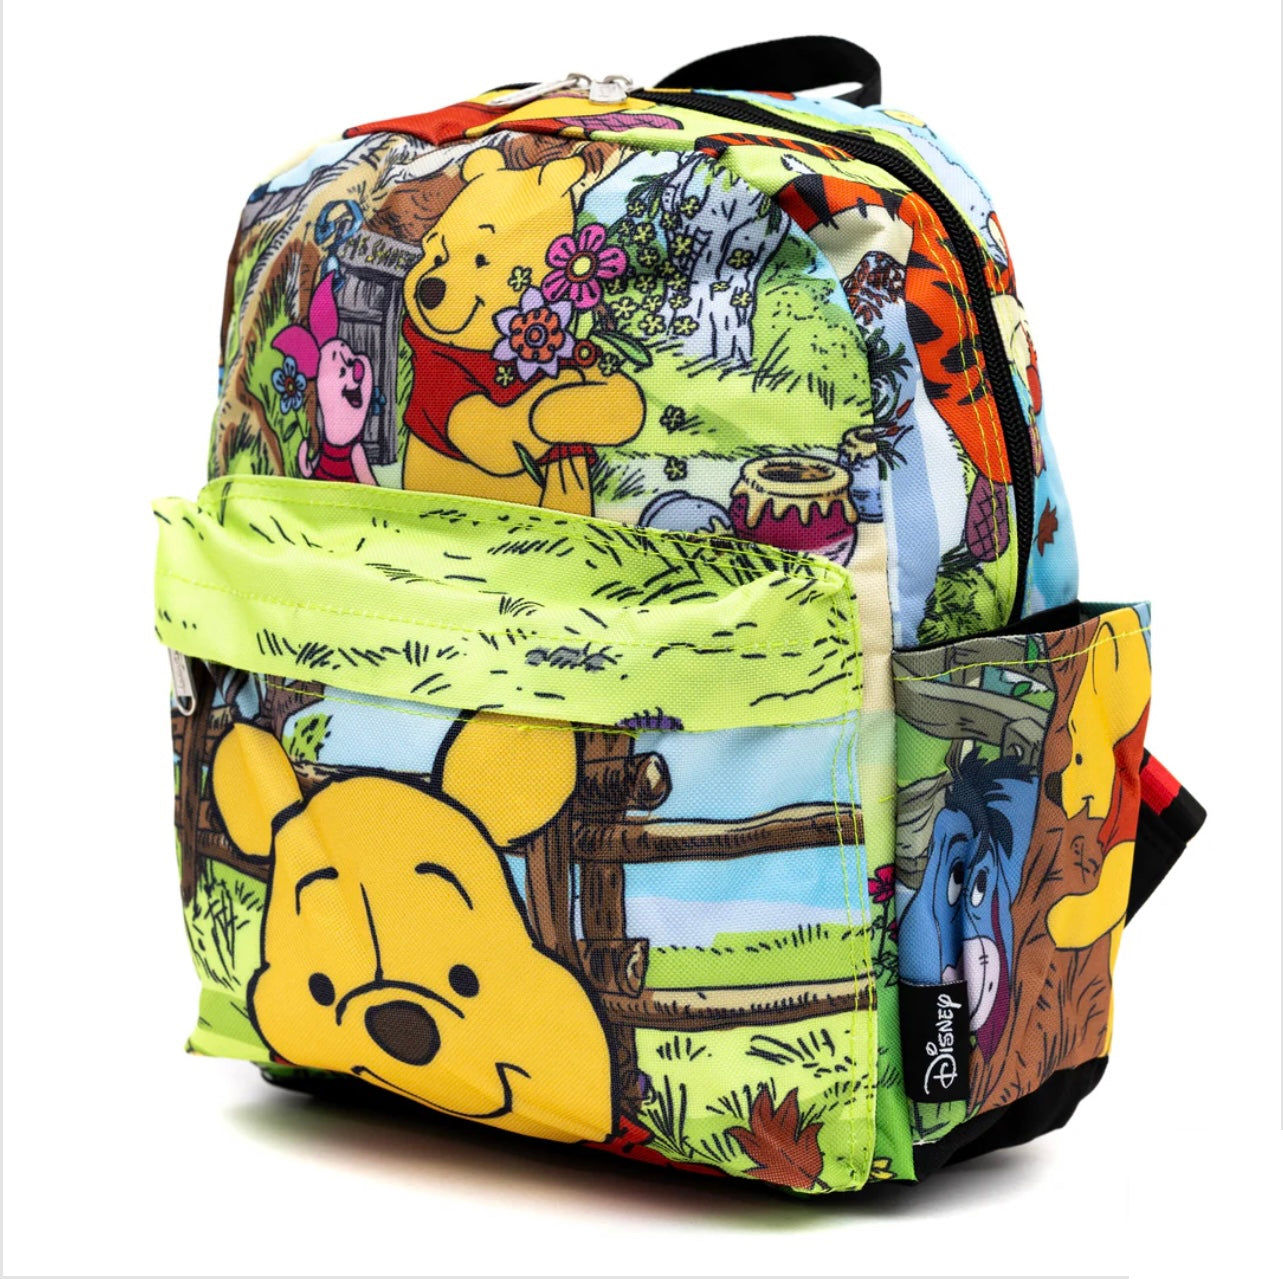 Winnie the Pooh Fabric Backpack